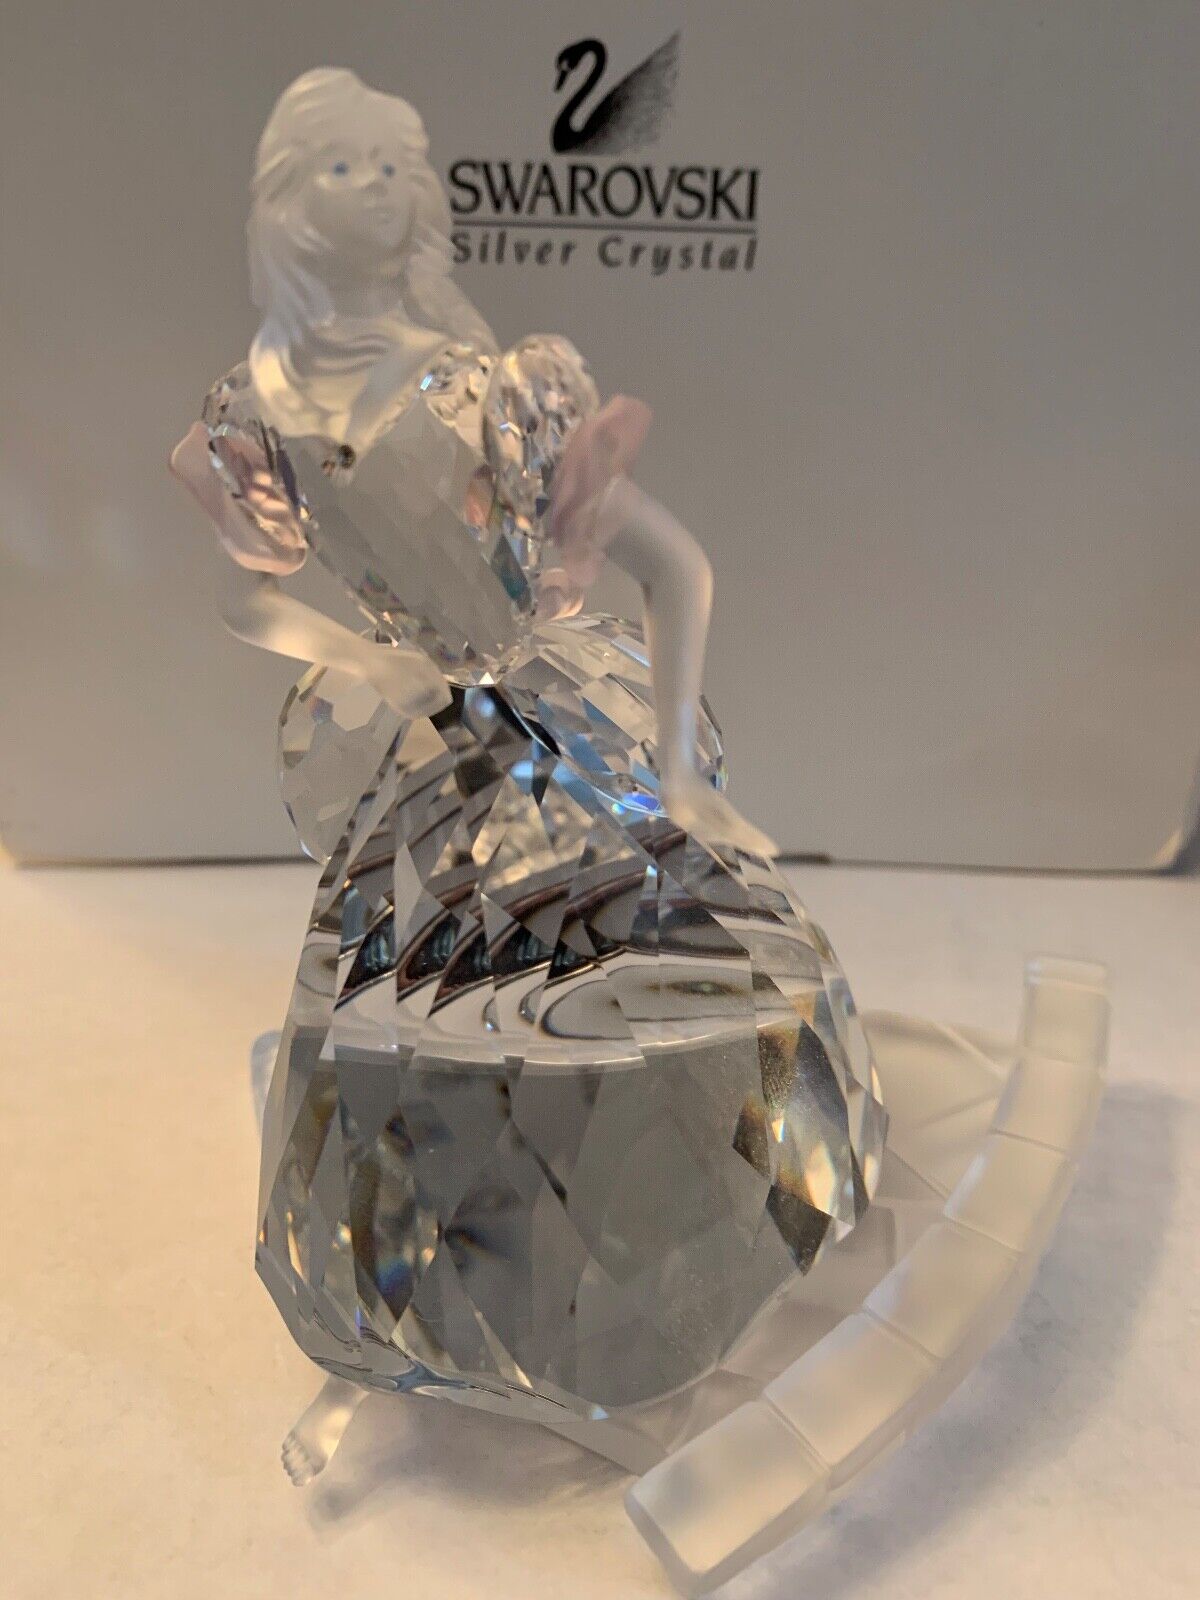 Swarovski Cinderella crystal figurine with pink accents 255108 A 7550 NR 000 008